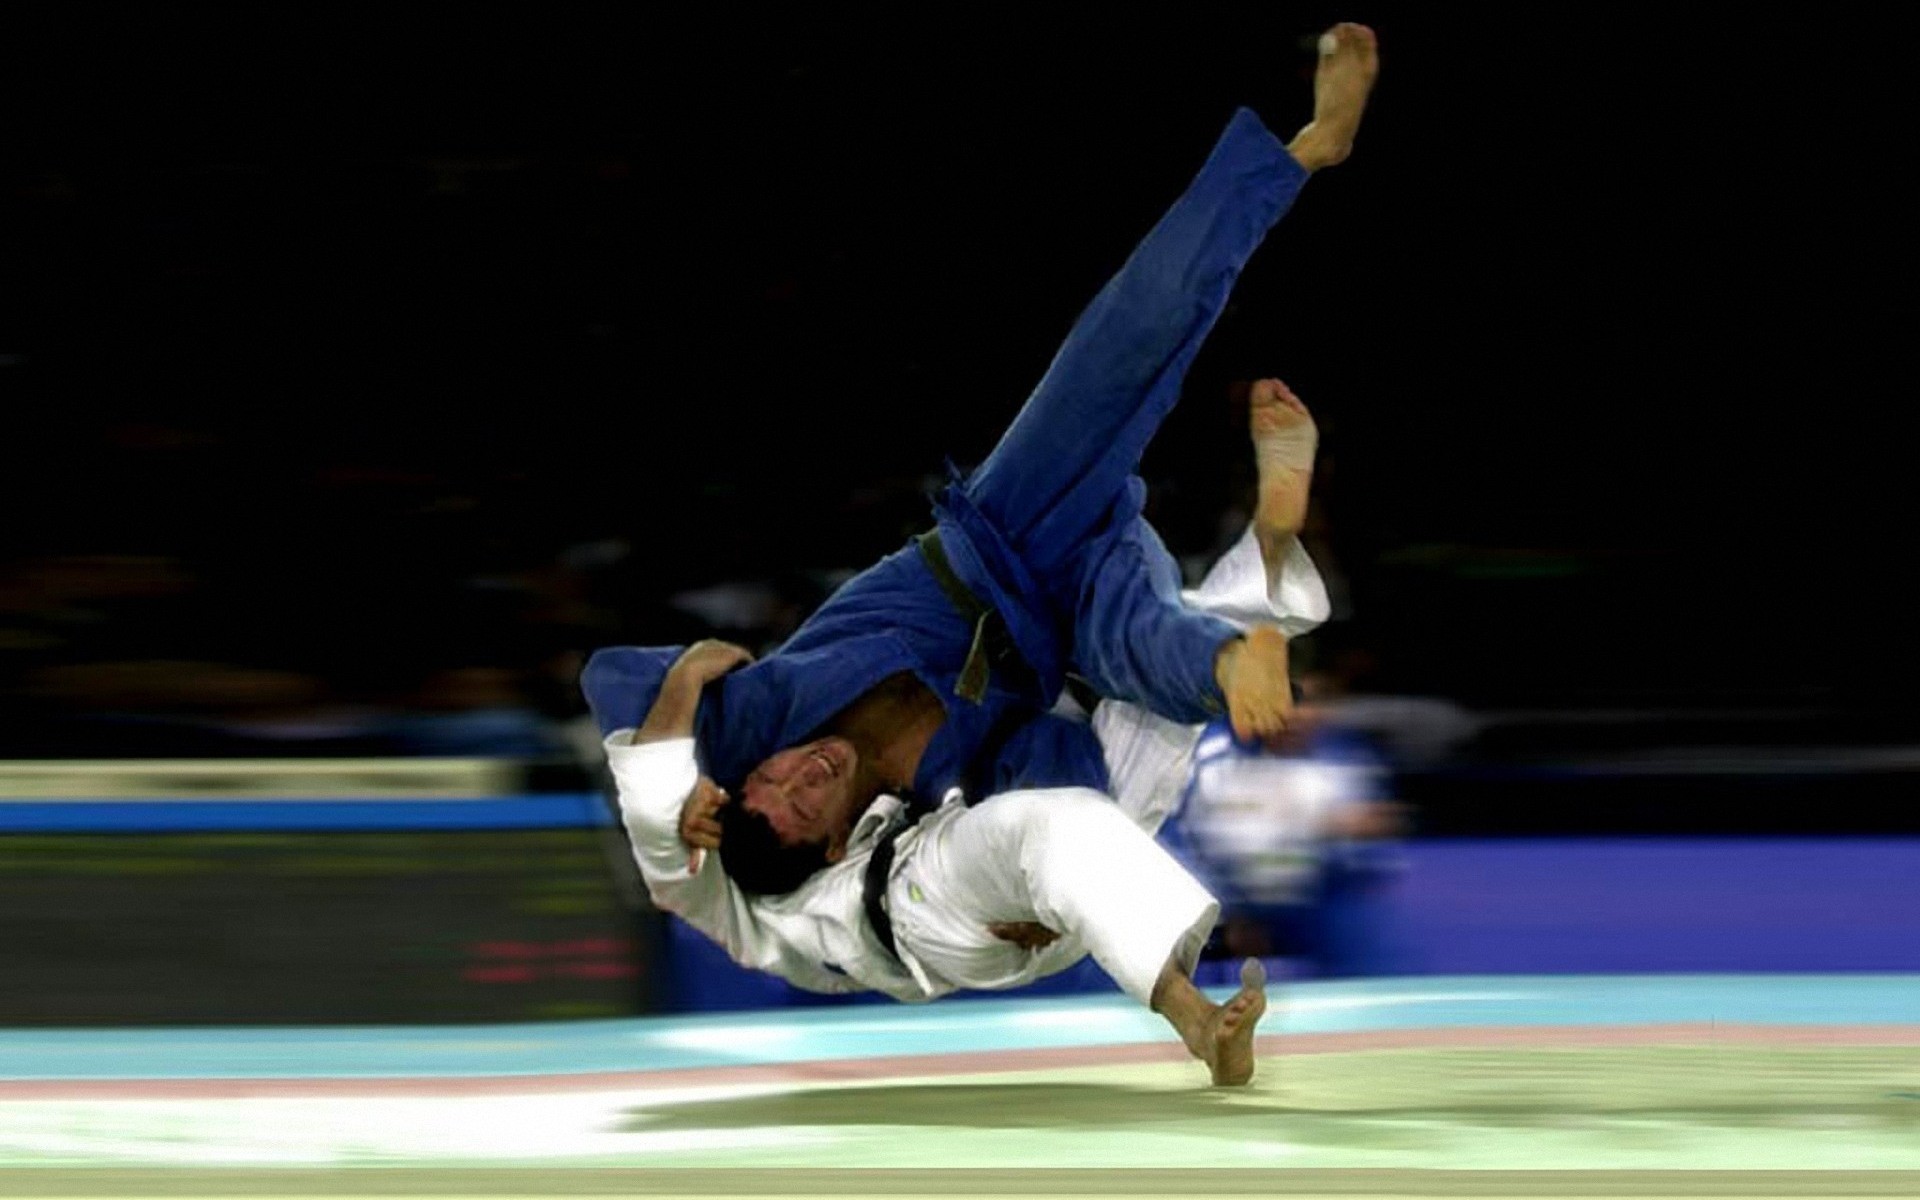 1920x1200 judo wallpaper Google Search flyers inspiration Pinterest Â· Brazilian Jiu  JitsuJudoWallpapers ...